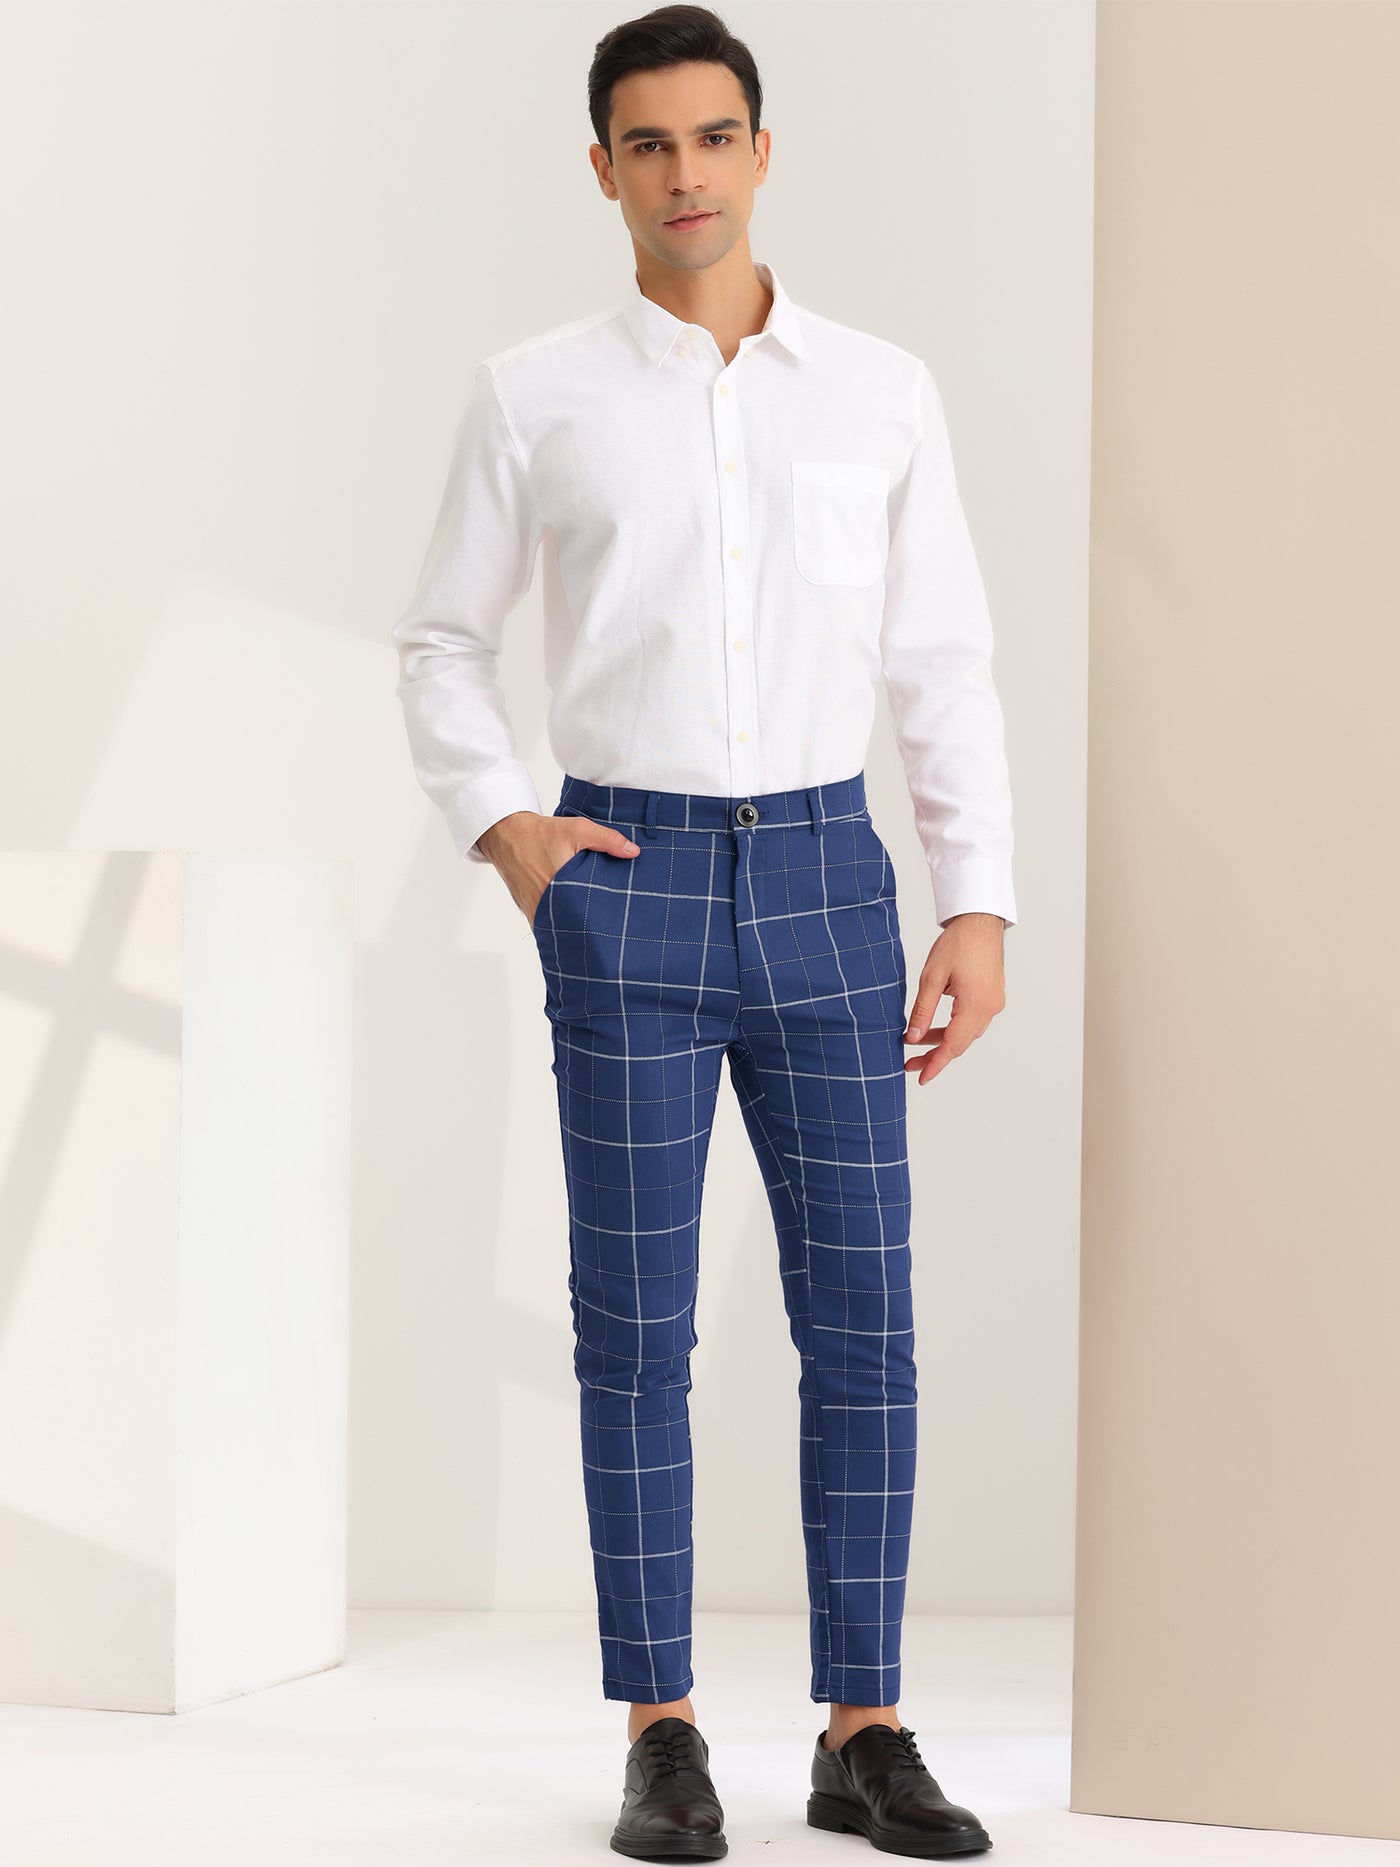 Bublédon Men's Dress Plaid Pants Slim Fit Flat Front Business Work Checked Trousers